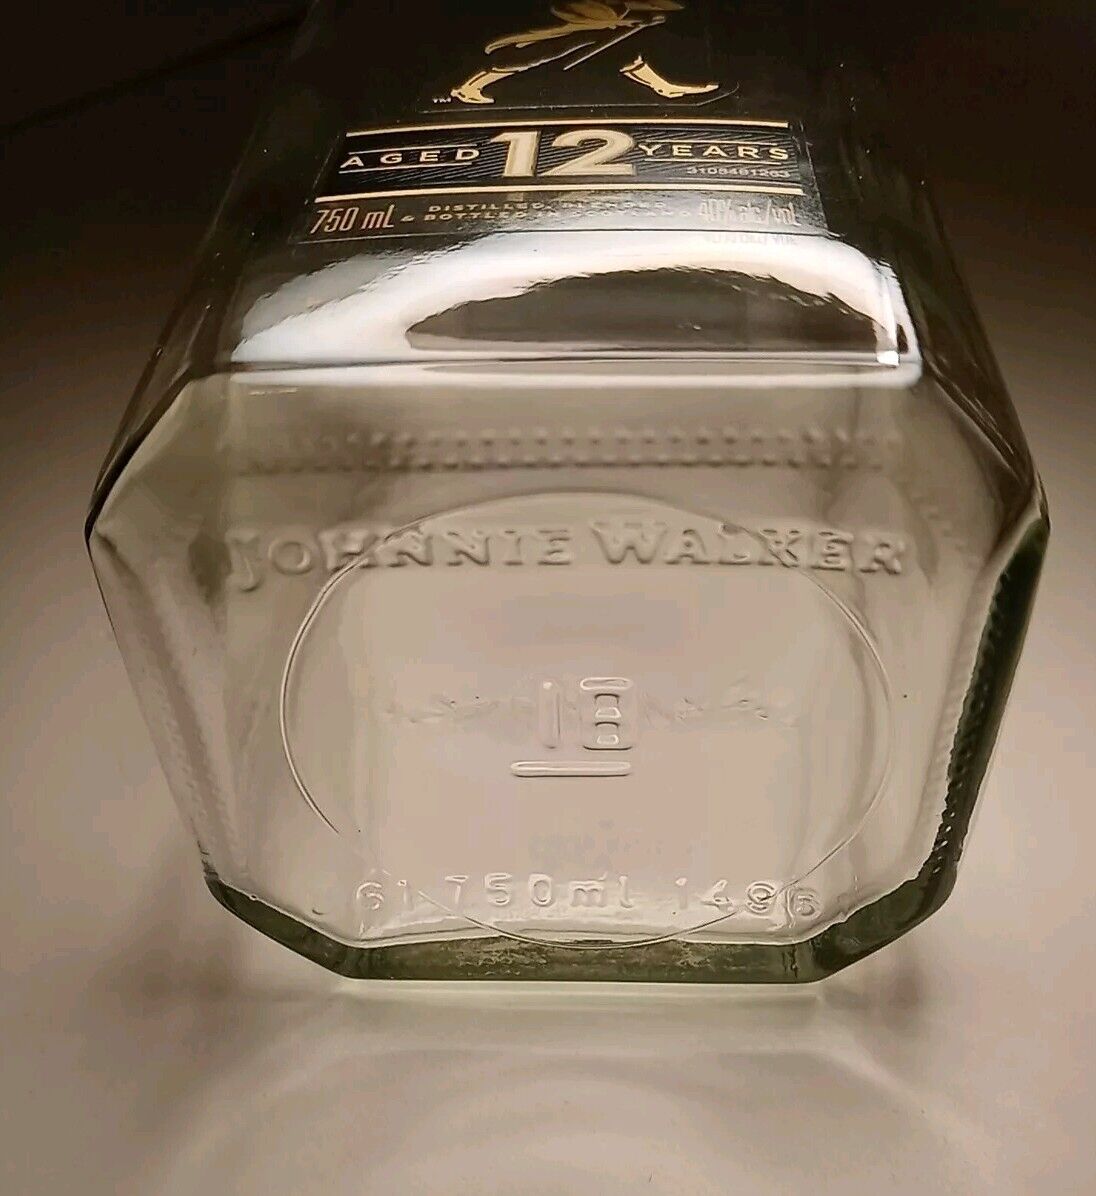 Johnnie Walker Black Label 12 Year Blended Scotch Whisky - *EMPTY* 750ML Bottle